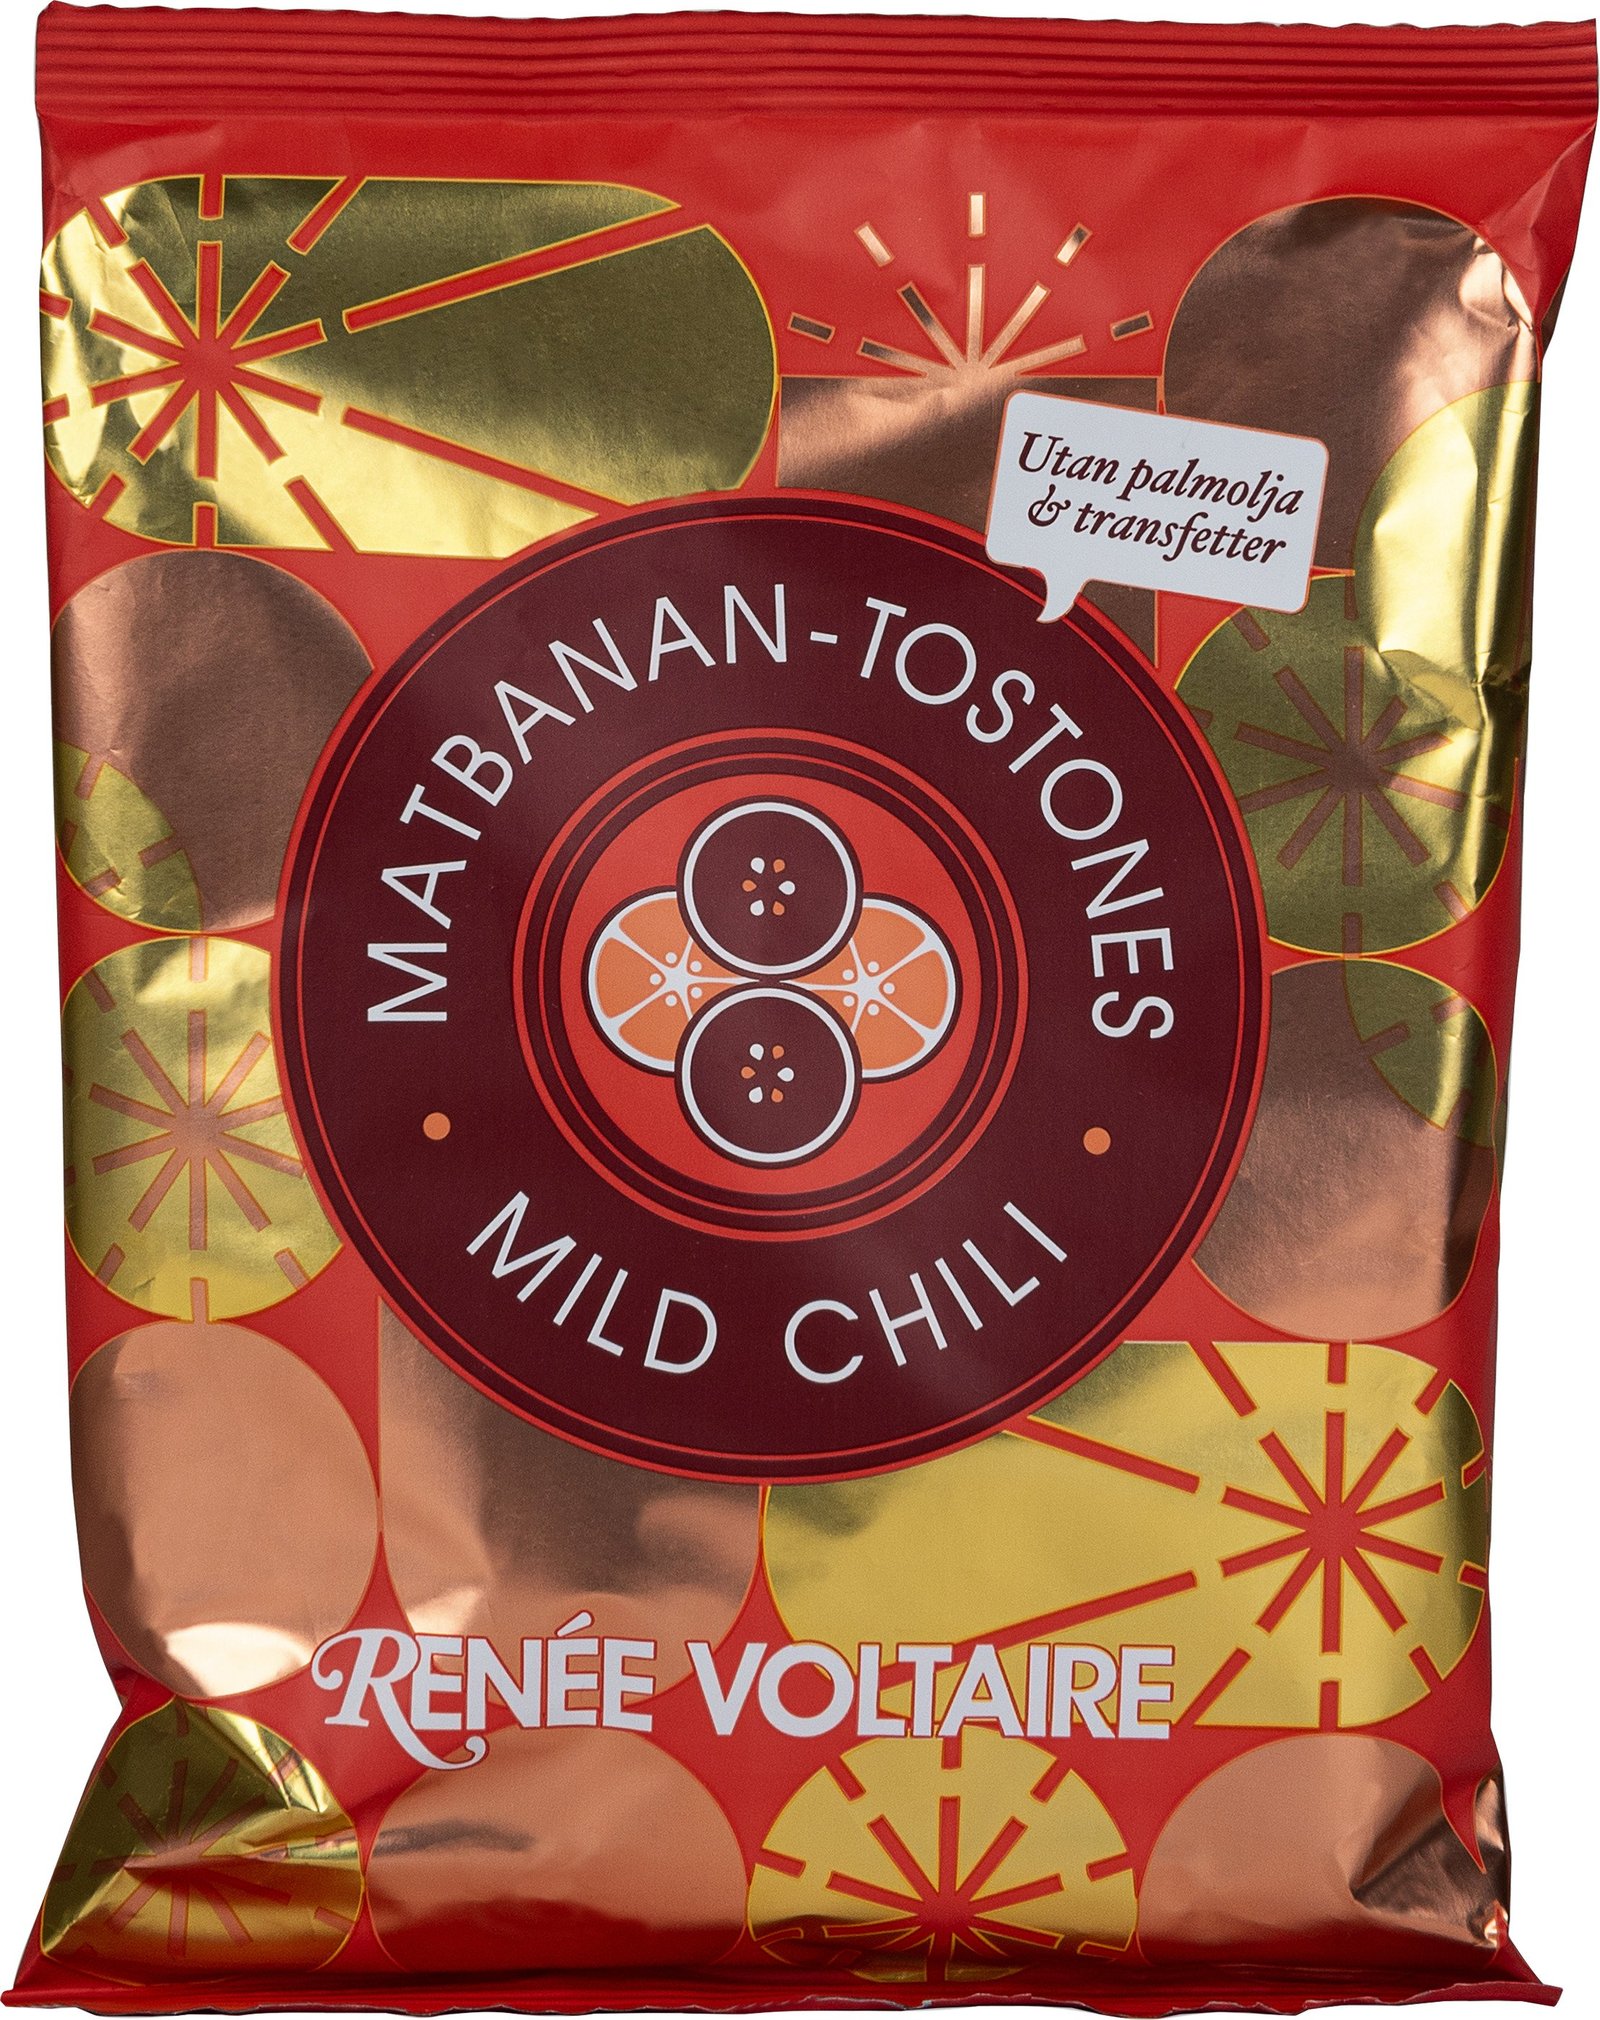 Renée Voltaire Matbanan-Tostones Mild Chili 80 g